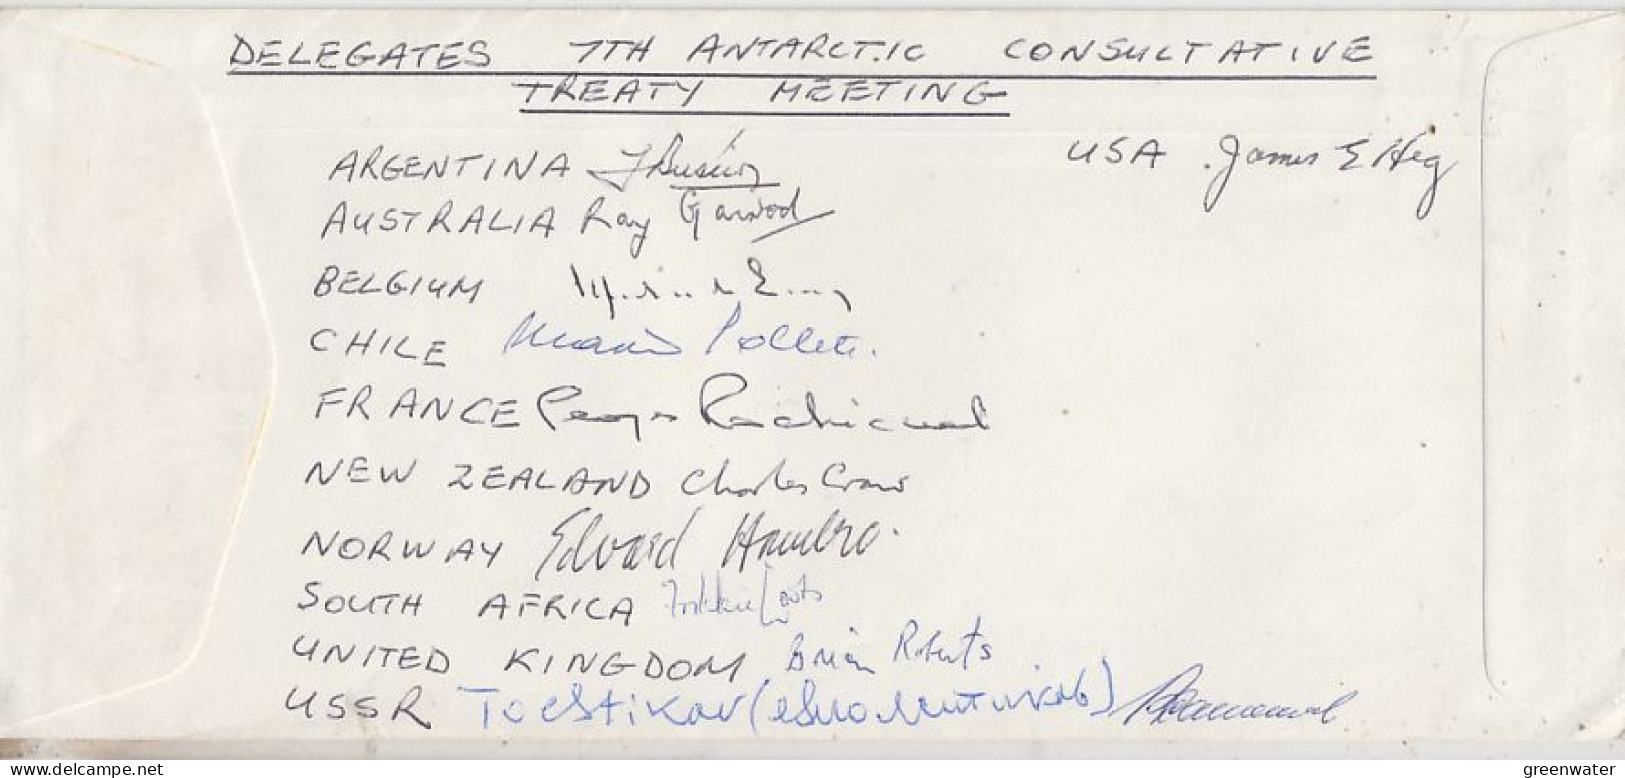 Ross Dependency "Delegates 7th. Antarctic Consultatie Treaty Meeting Wellington 1972 Ca Scott Base  20 NOV 1972 (RO206) - Lettres & Documents